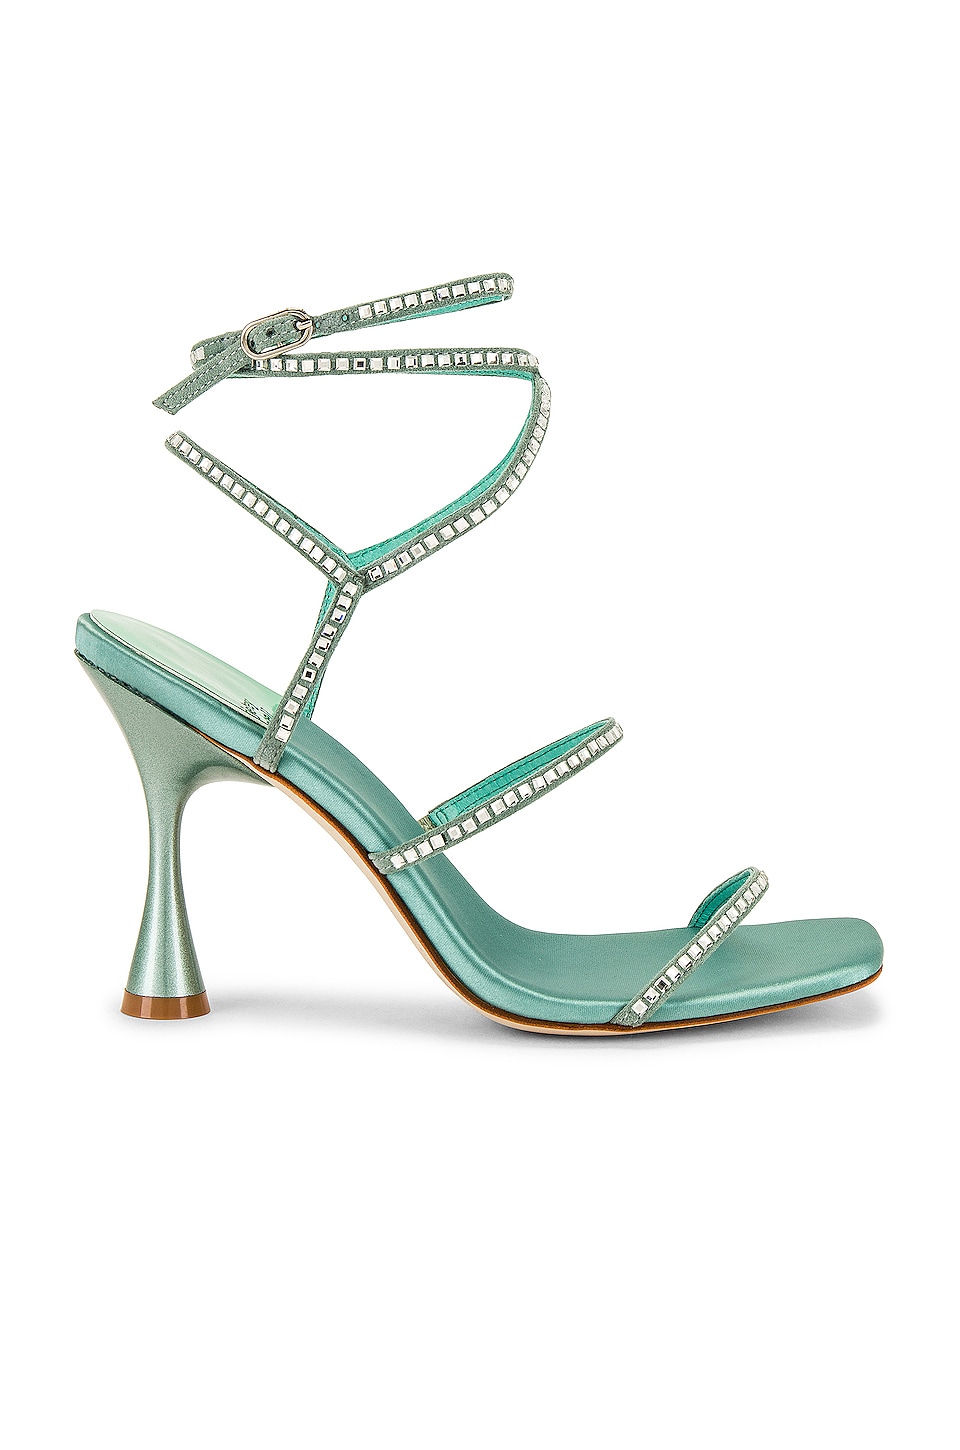 Jeffrey Campbell Glamorous Sandal in Turquoise Satin Silver | REVOLVE